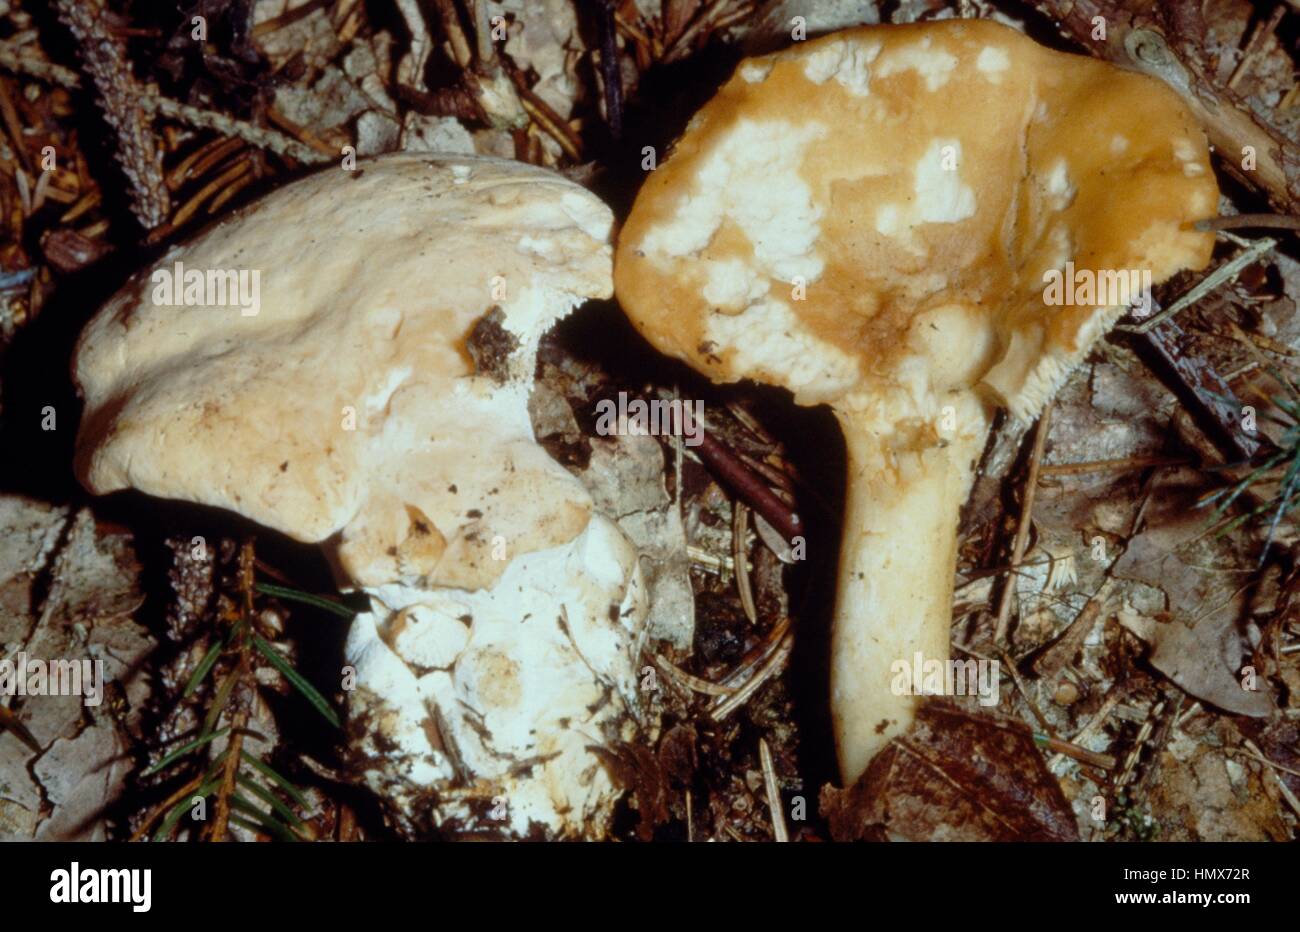 Terracotta Hedgehog (Hydnum rufescens) and Wood Hedgehog or Hedgehog mushroom (Hydnum repandum), Hydnaceae. Stock Photo